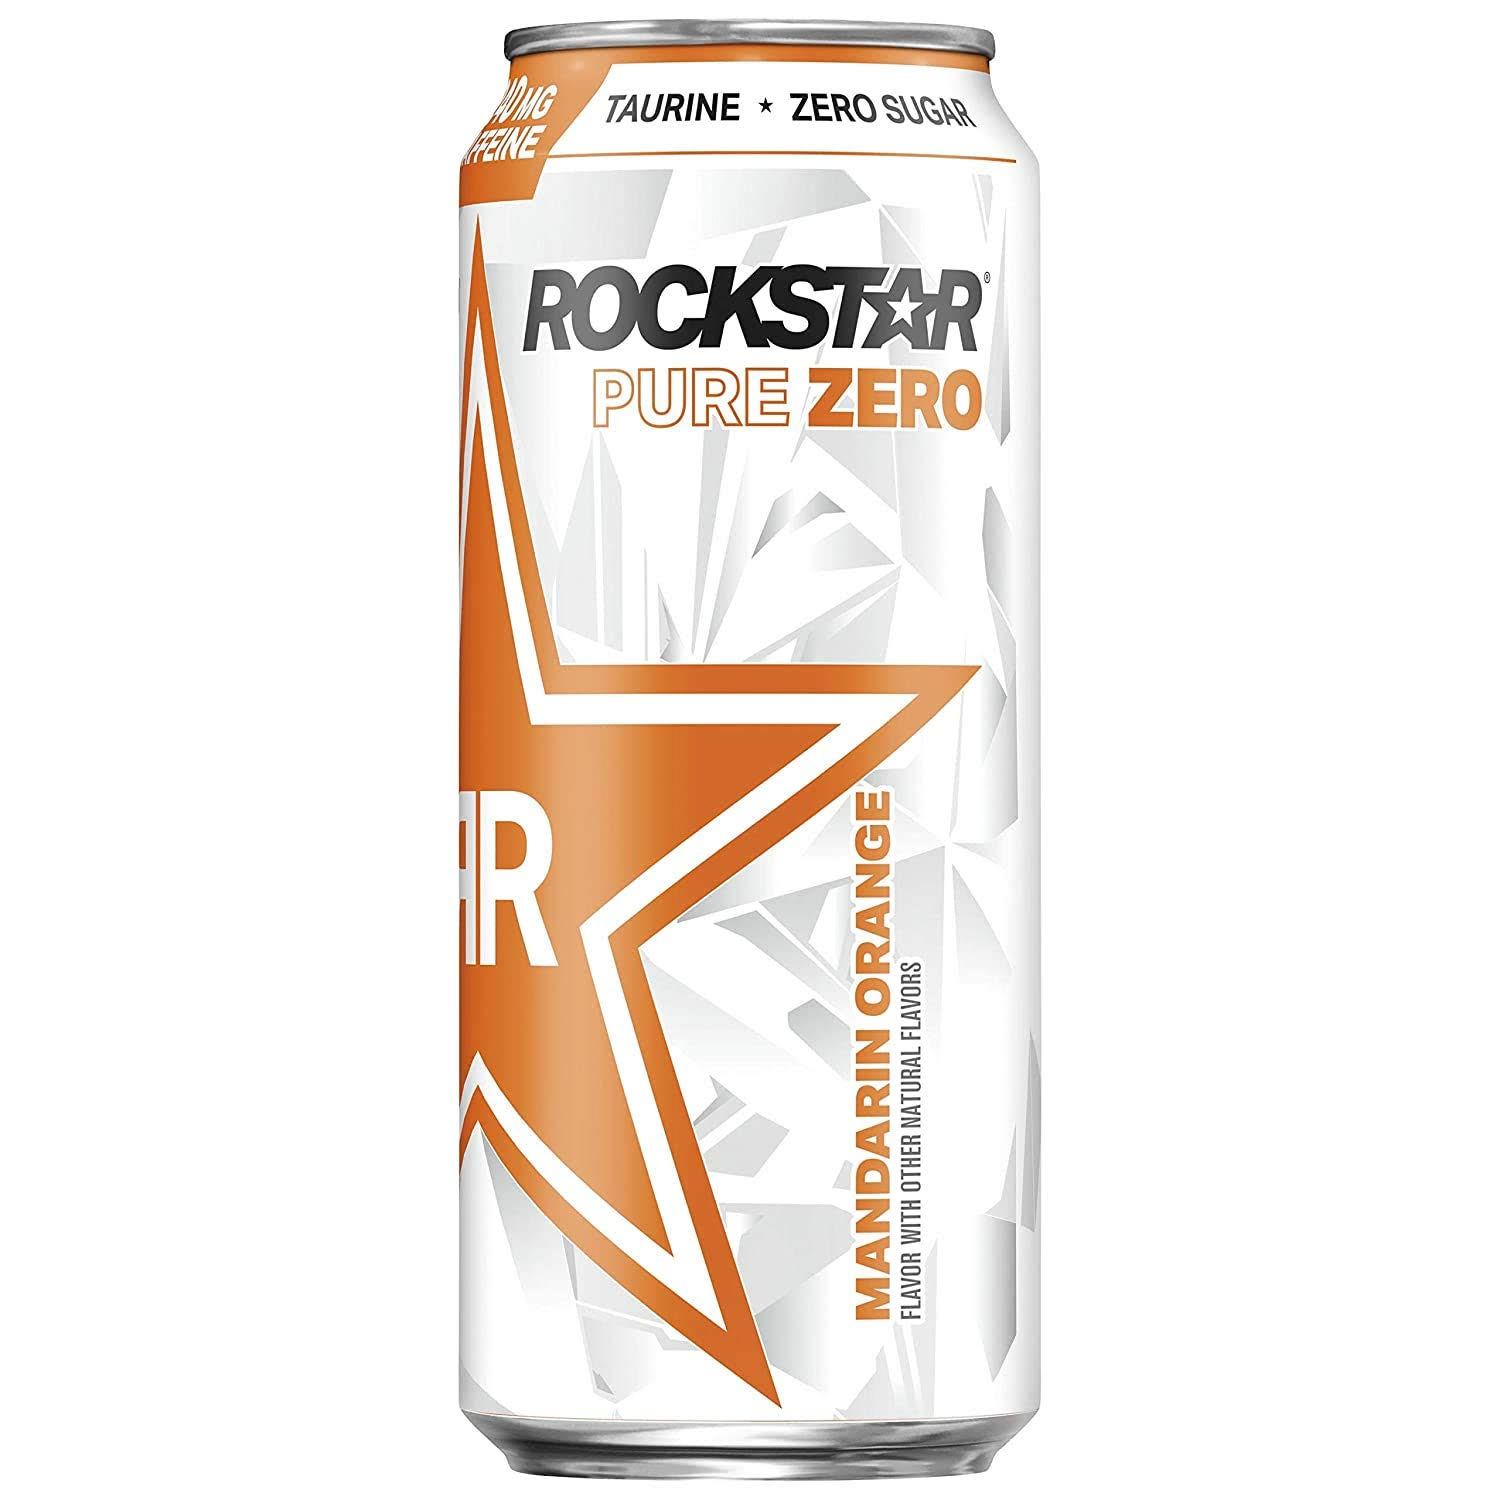 Rockstar Pure Zero Energy Drink, Sugar Free, Mandarin Orange - 16 fl oz